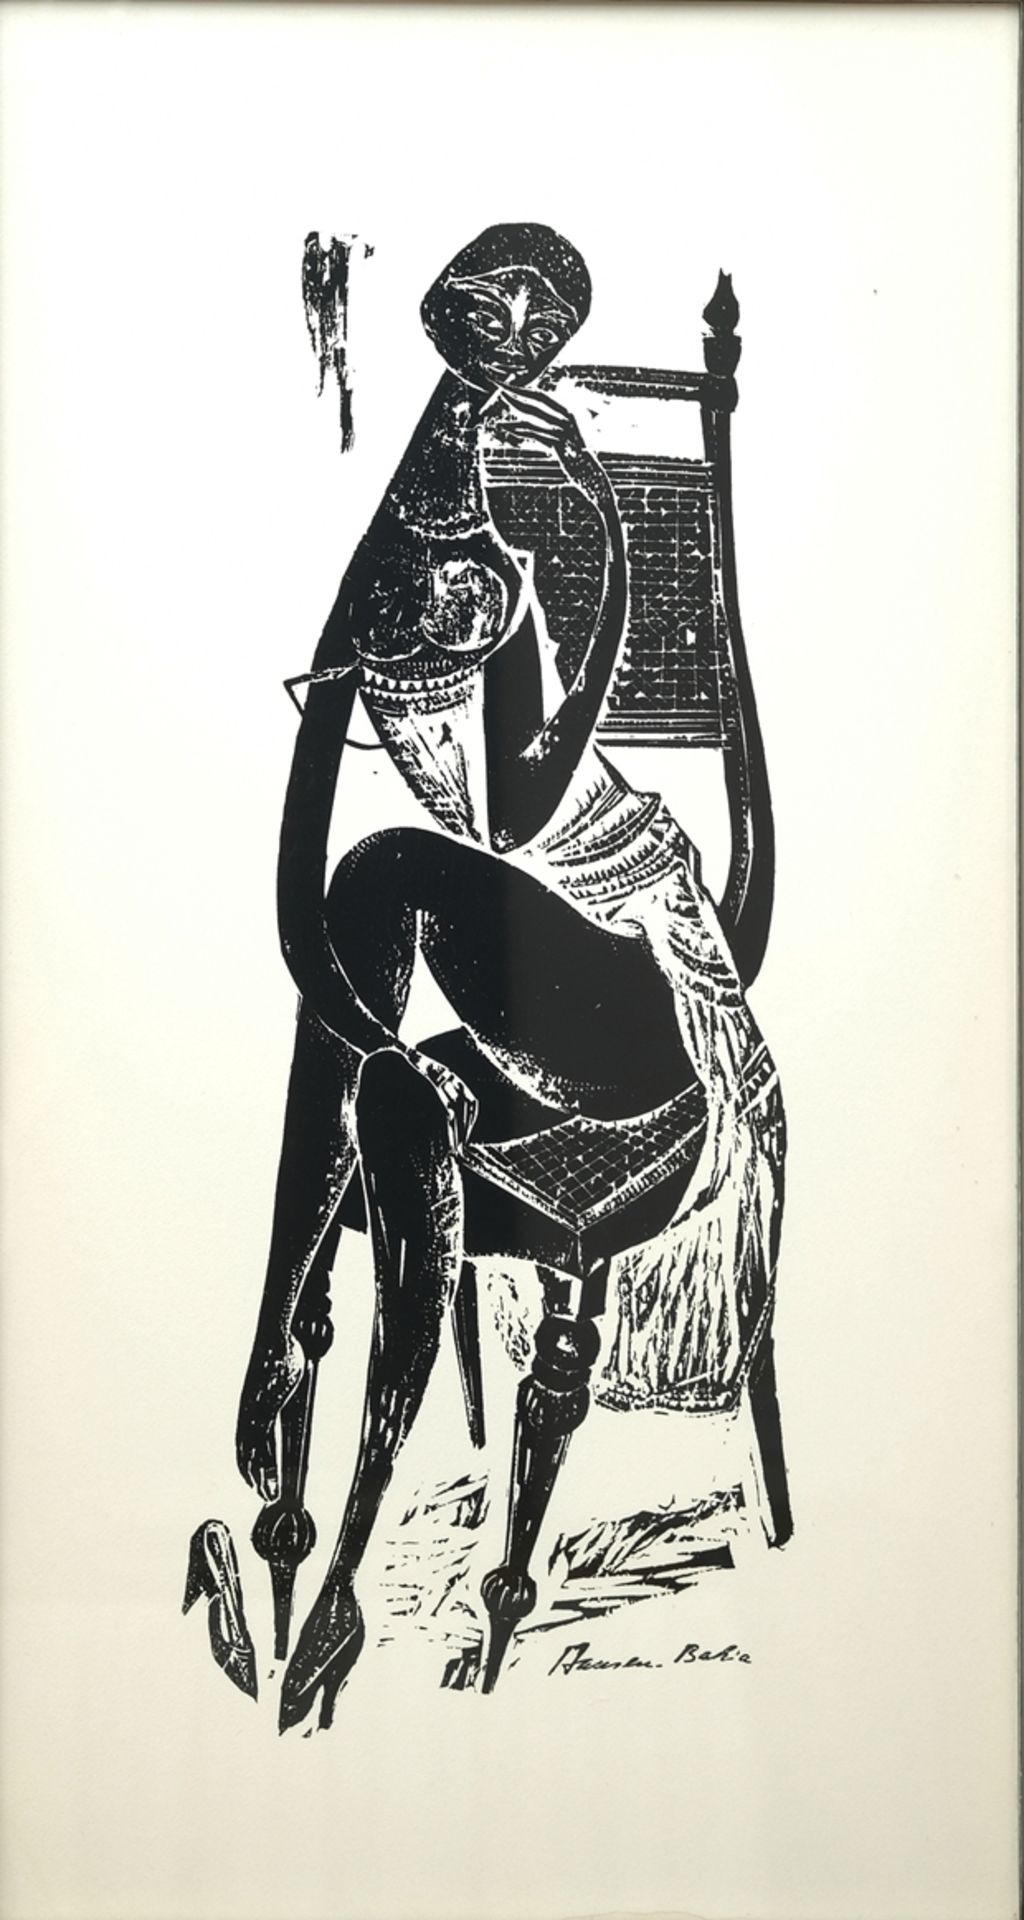 Hansen-Bahia, Karl Heinz (1915 - 1978), Frauenakt, no year, woodcut.